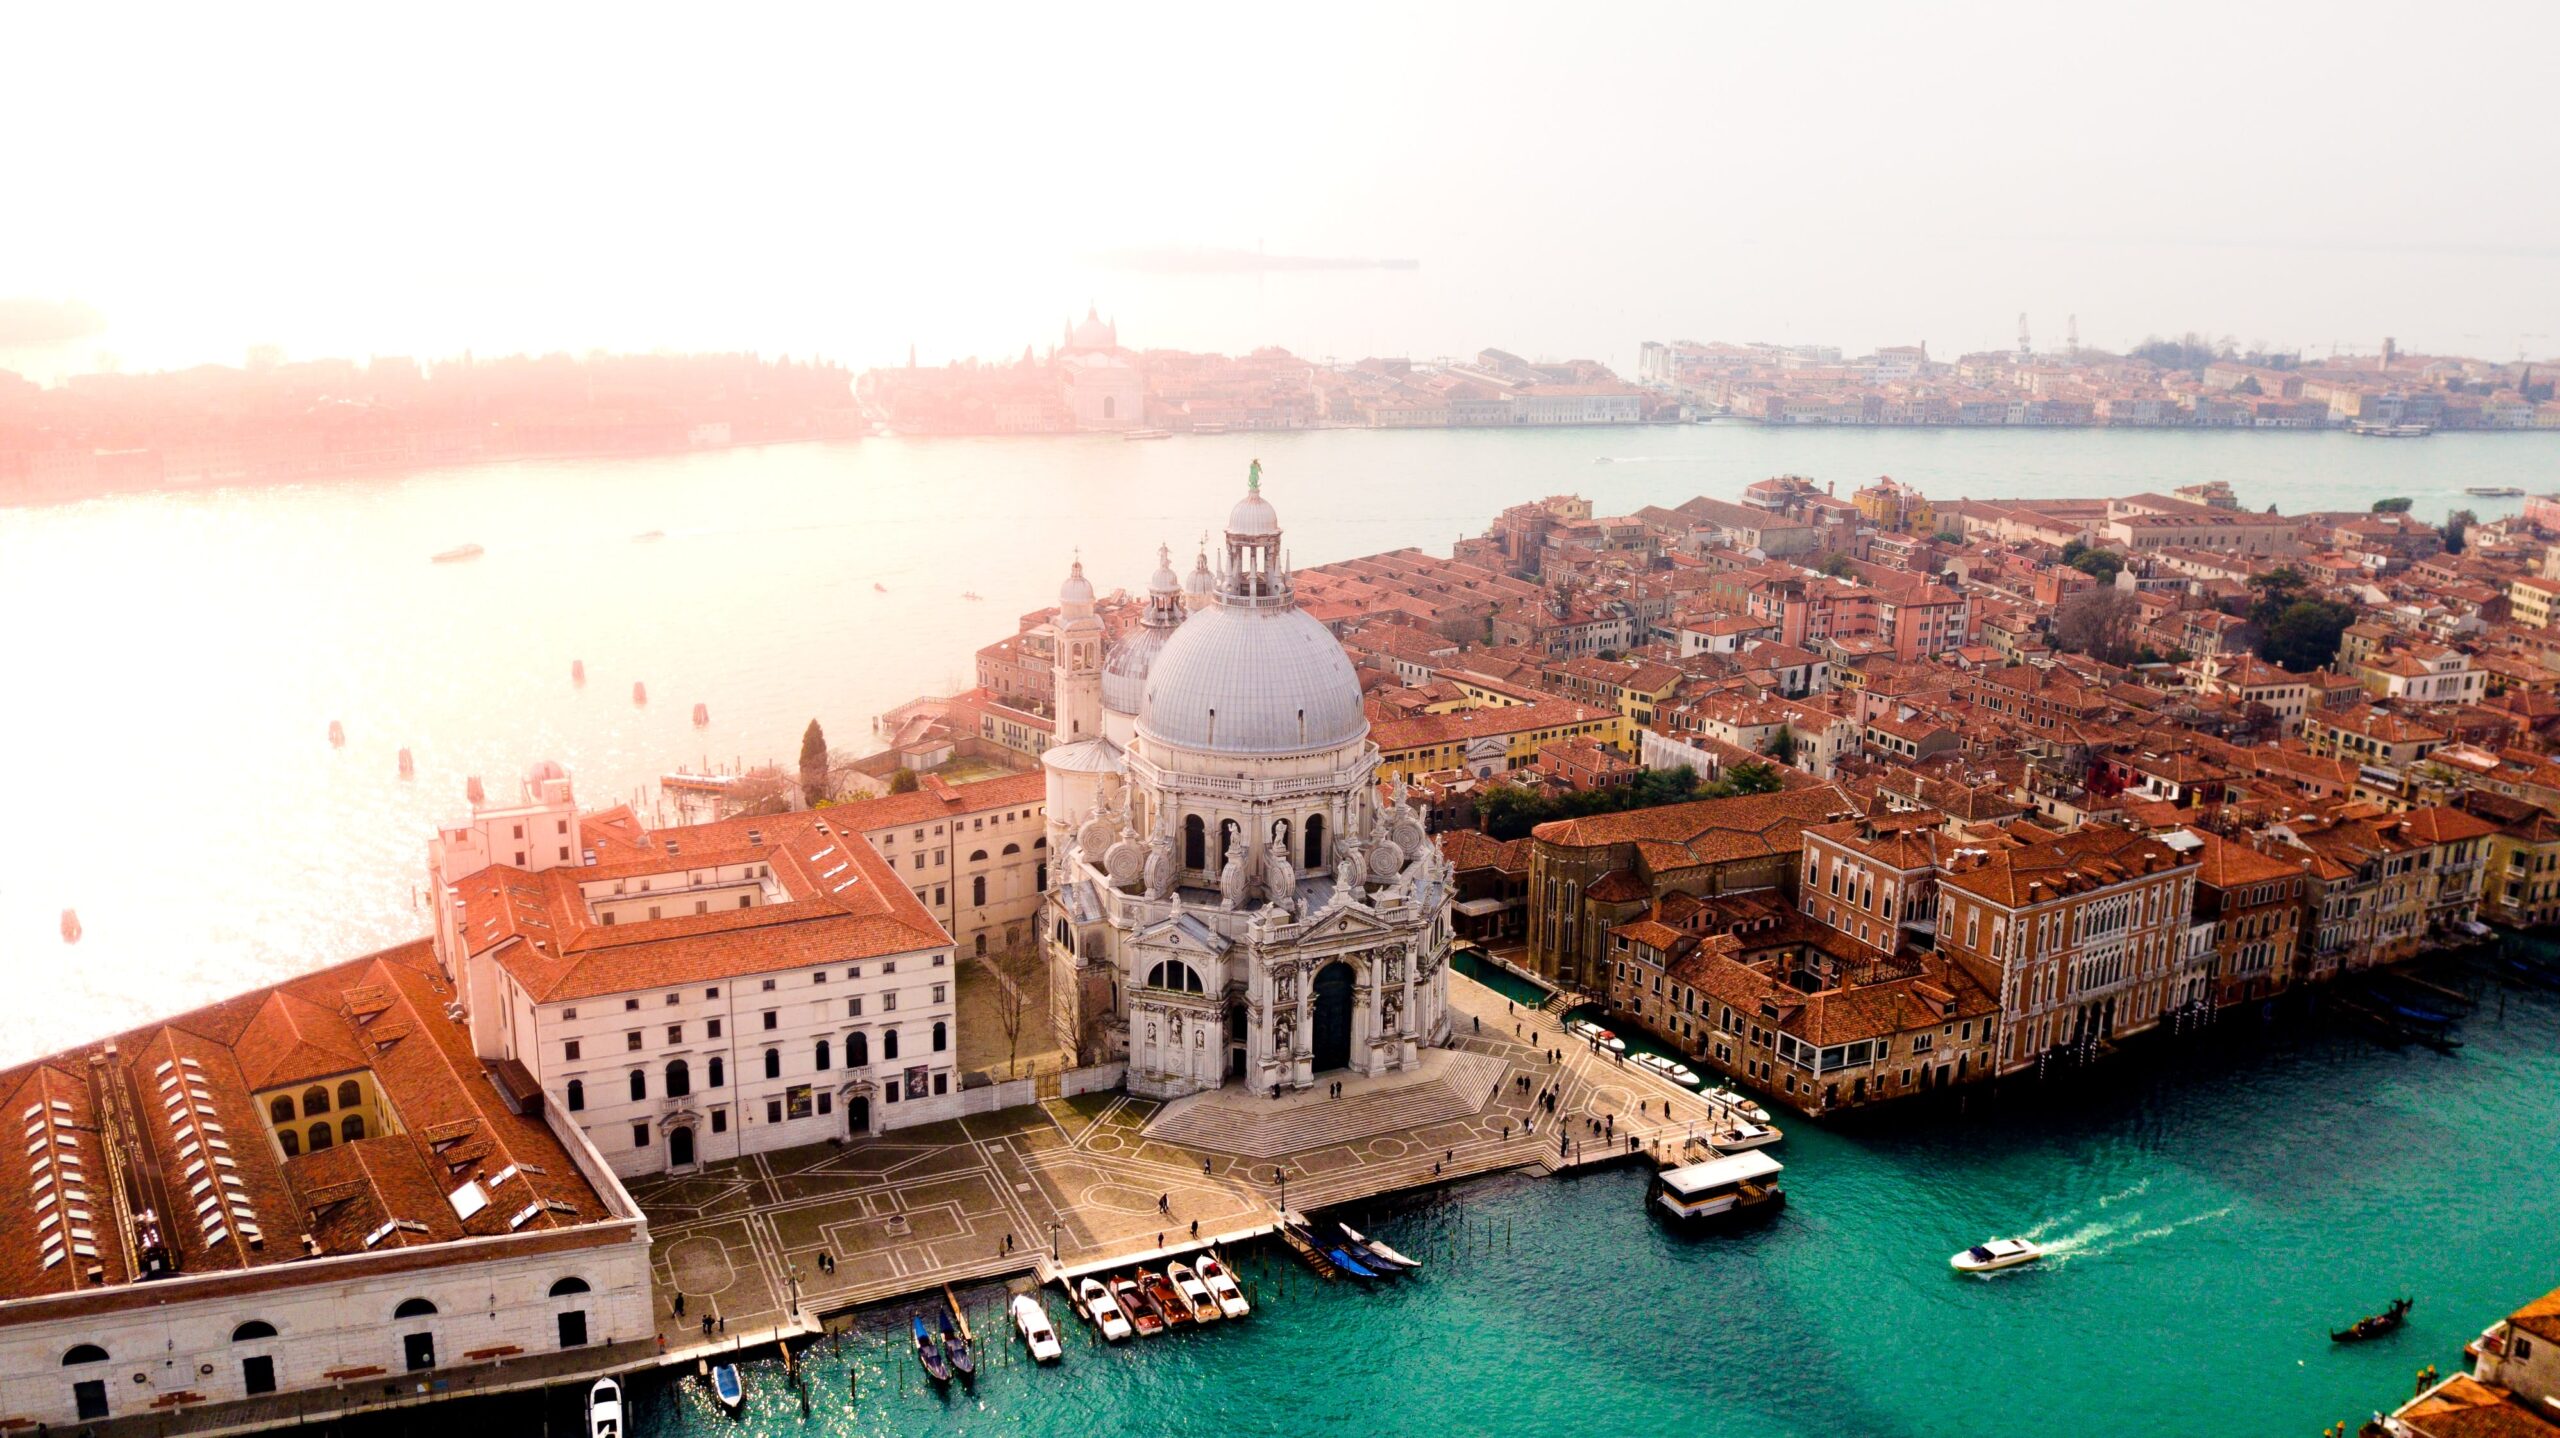 Metropolitan City of Venice, Italy (1)